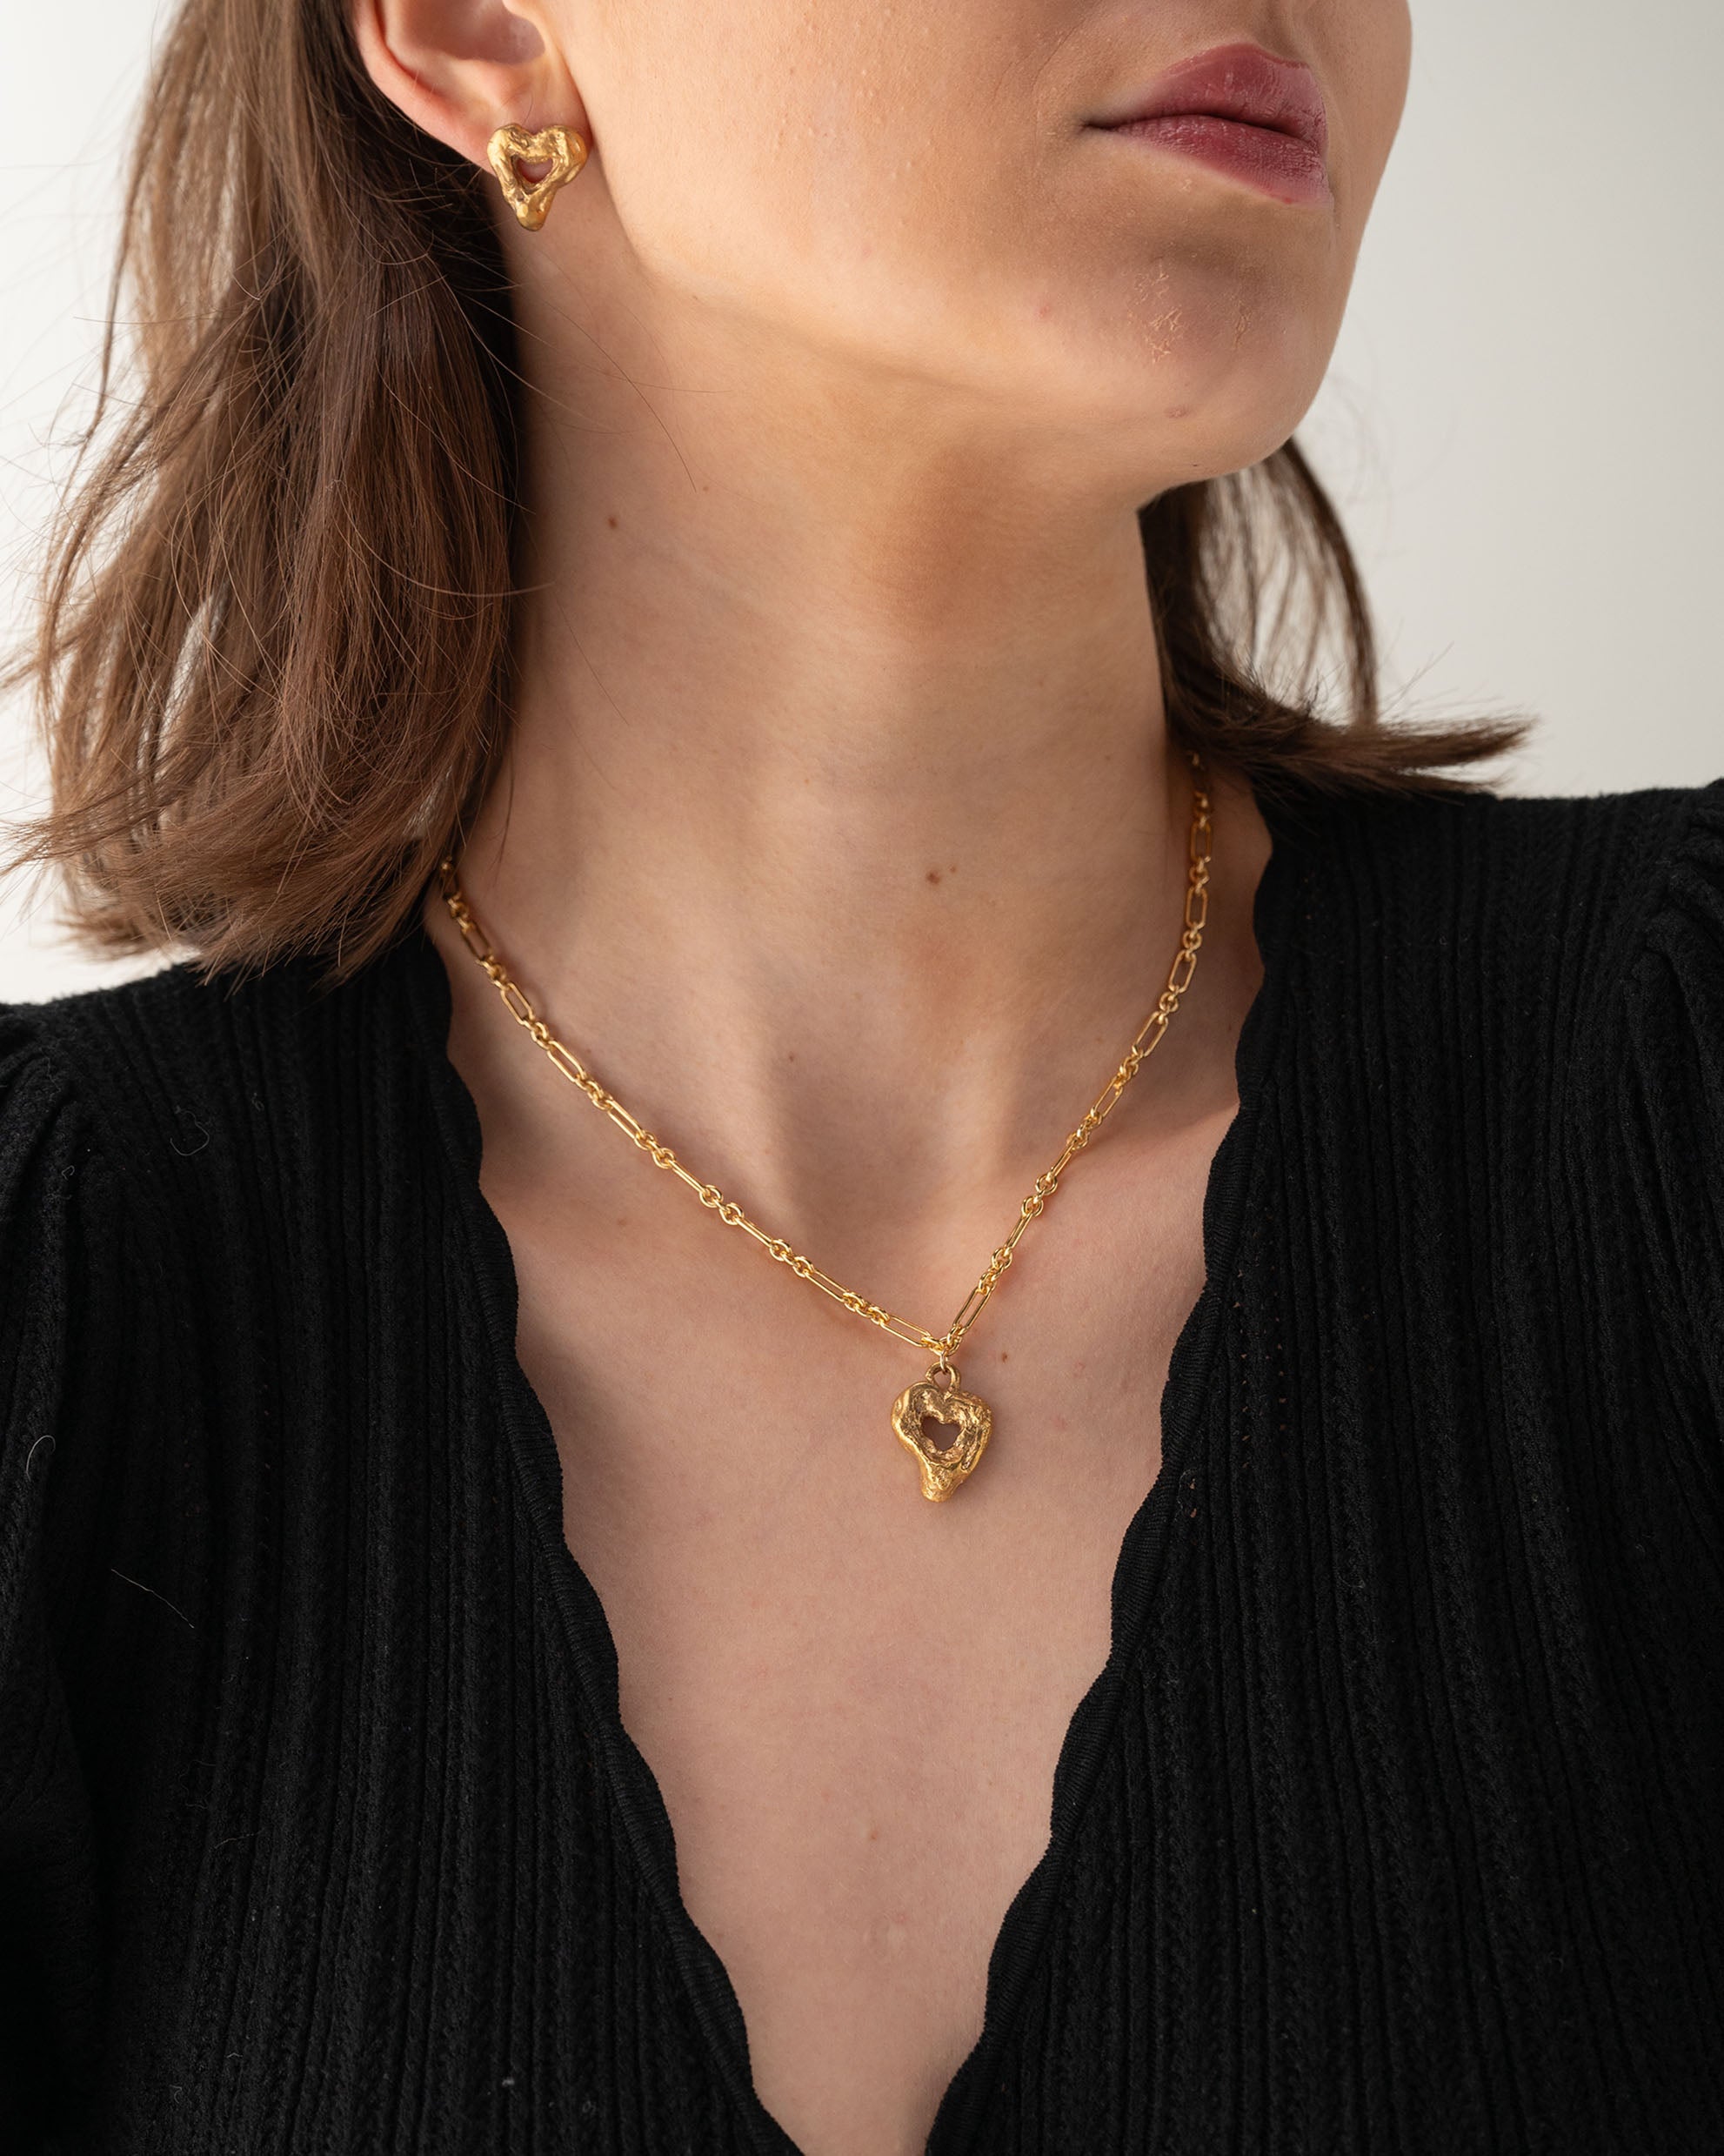 melting heart necklace gold model close up